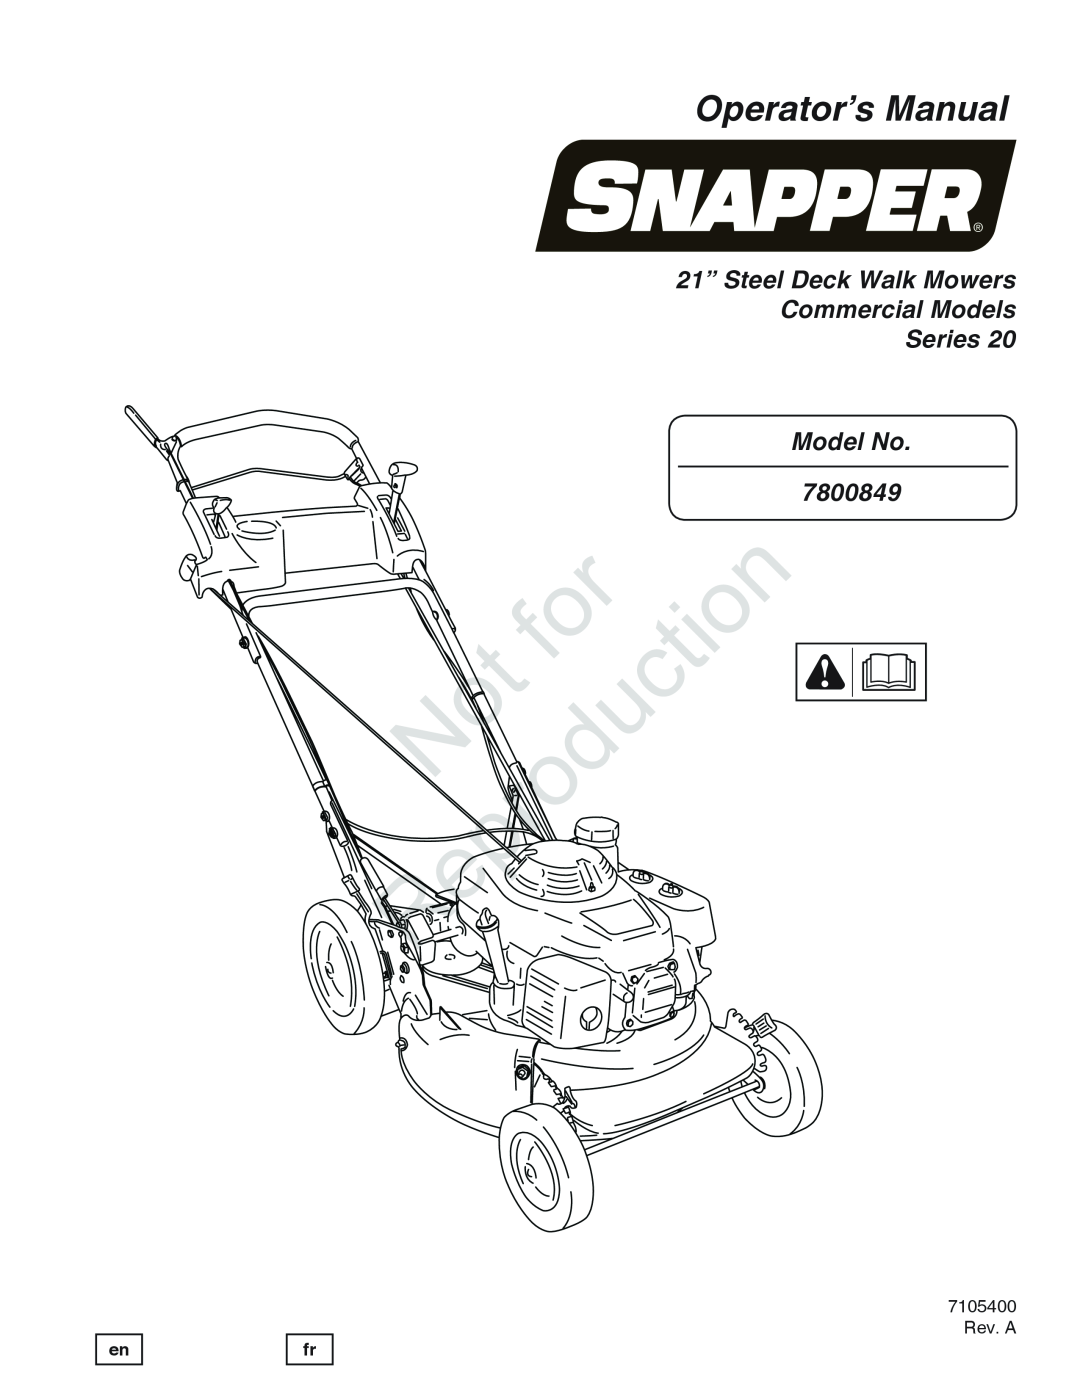 Snapper 7800849 manual Re production, Operator’s Manual, 21” Steel Deck Walk Mowers Commercial Models Series Model No 